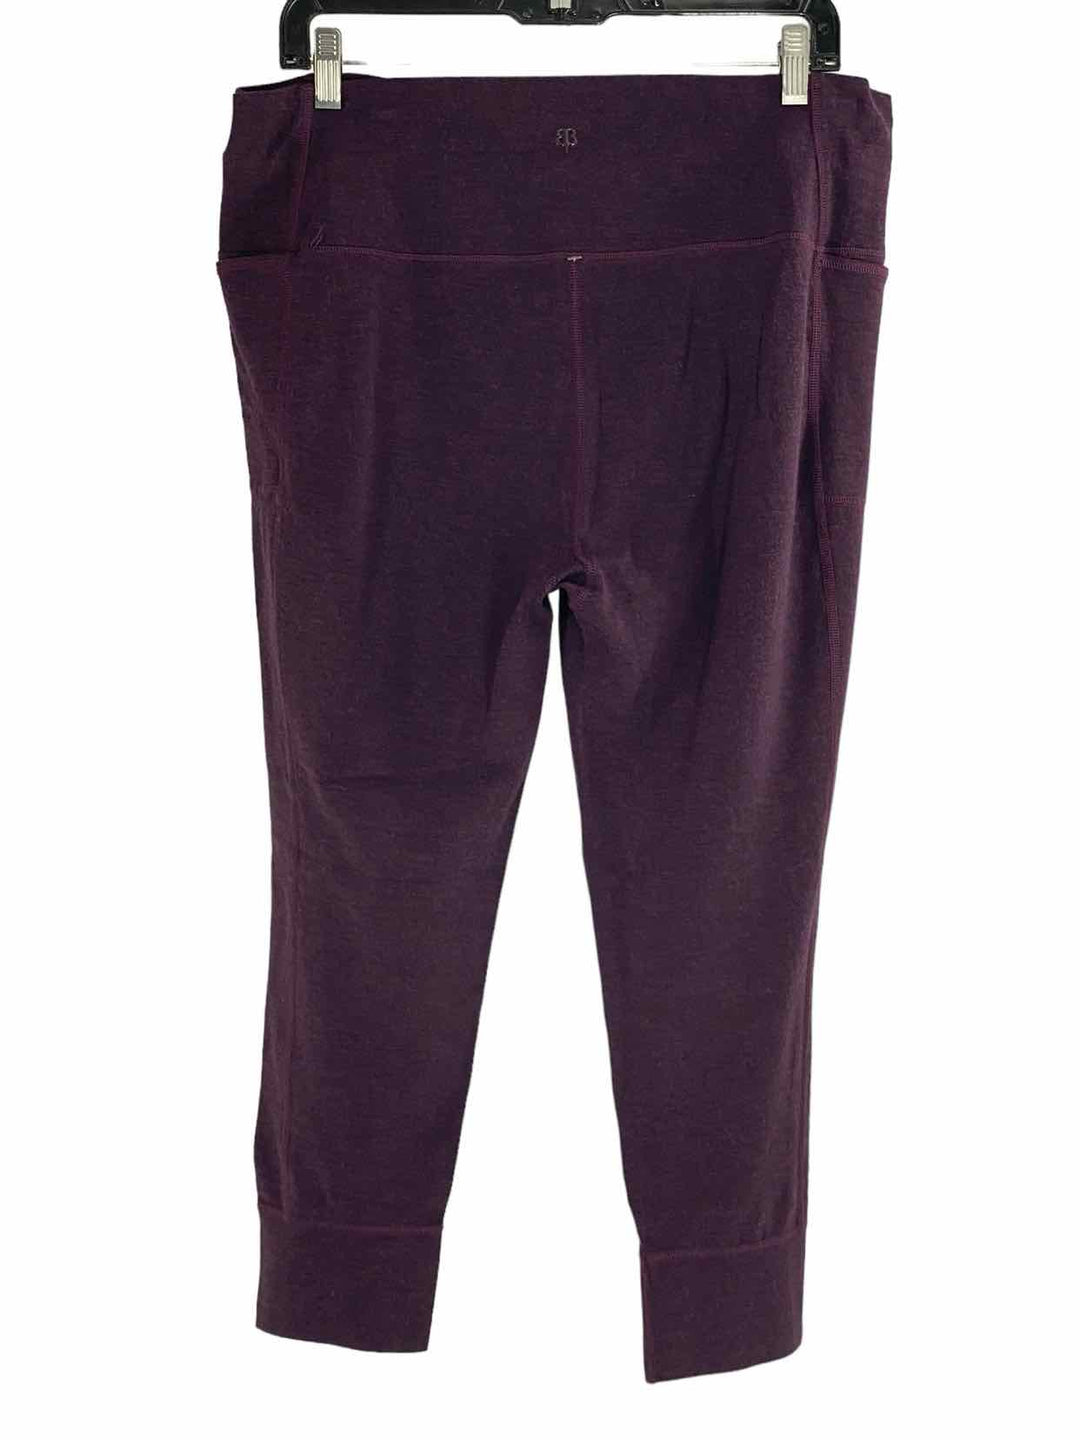 Betabrand Size 2X Purple Athletic Pants